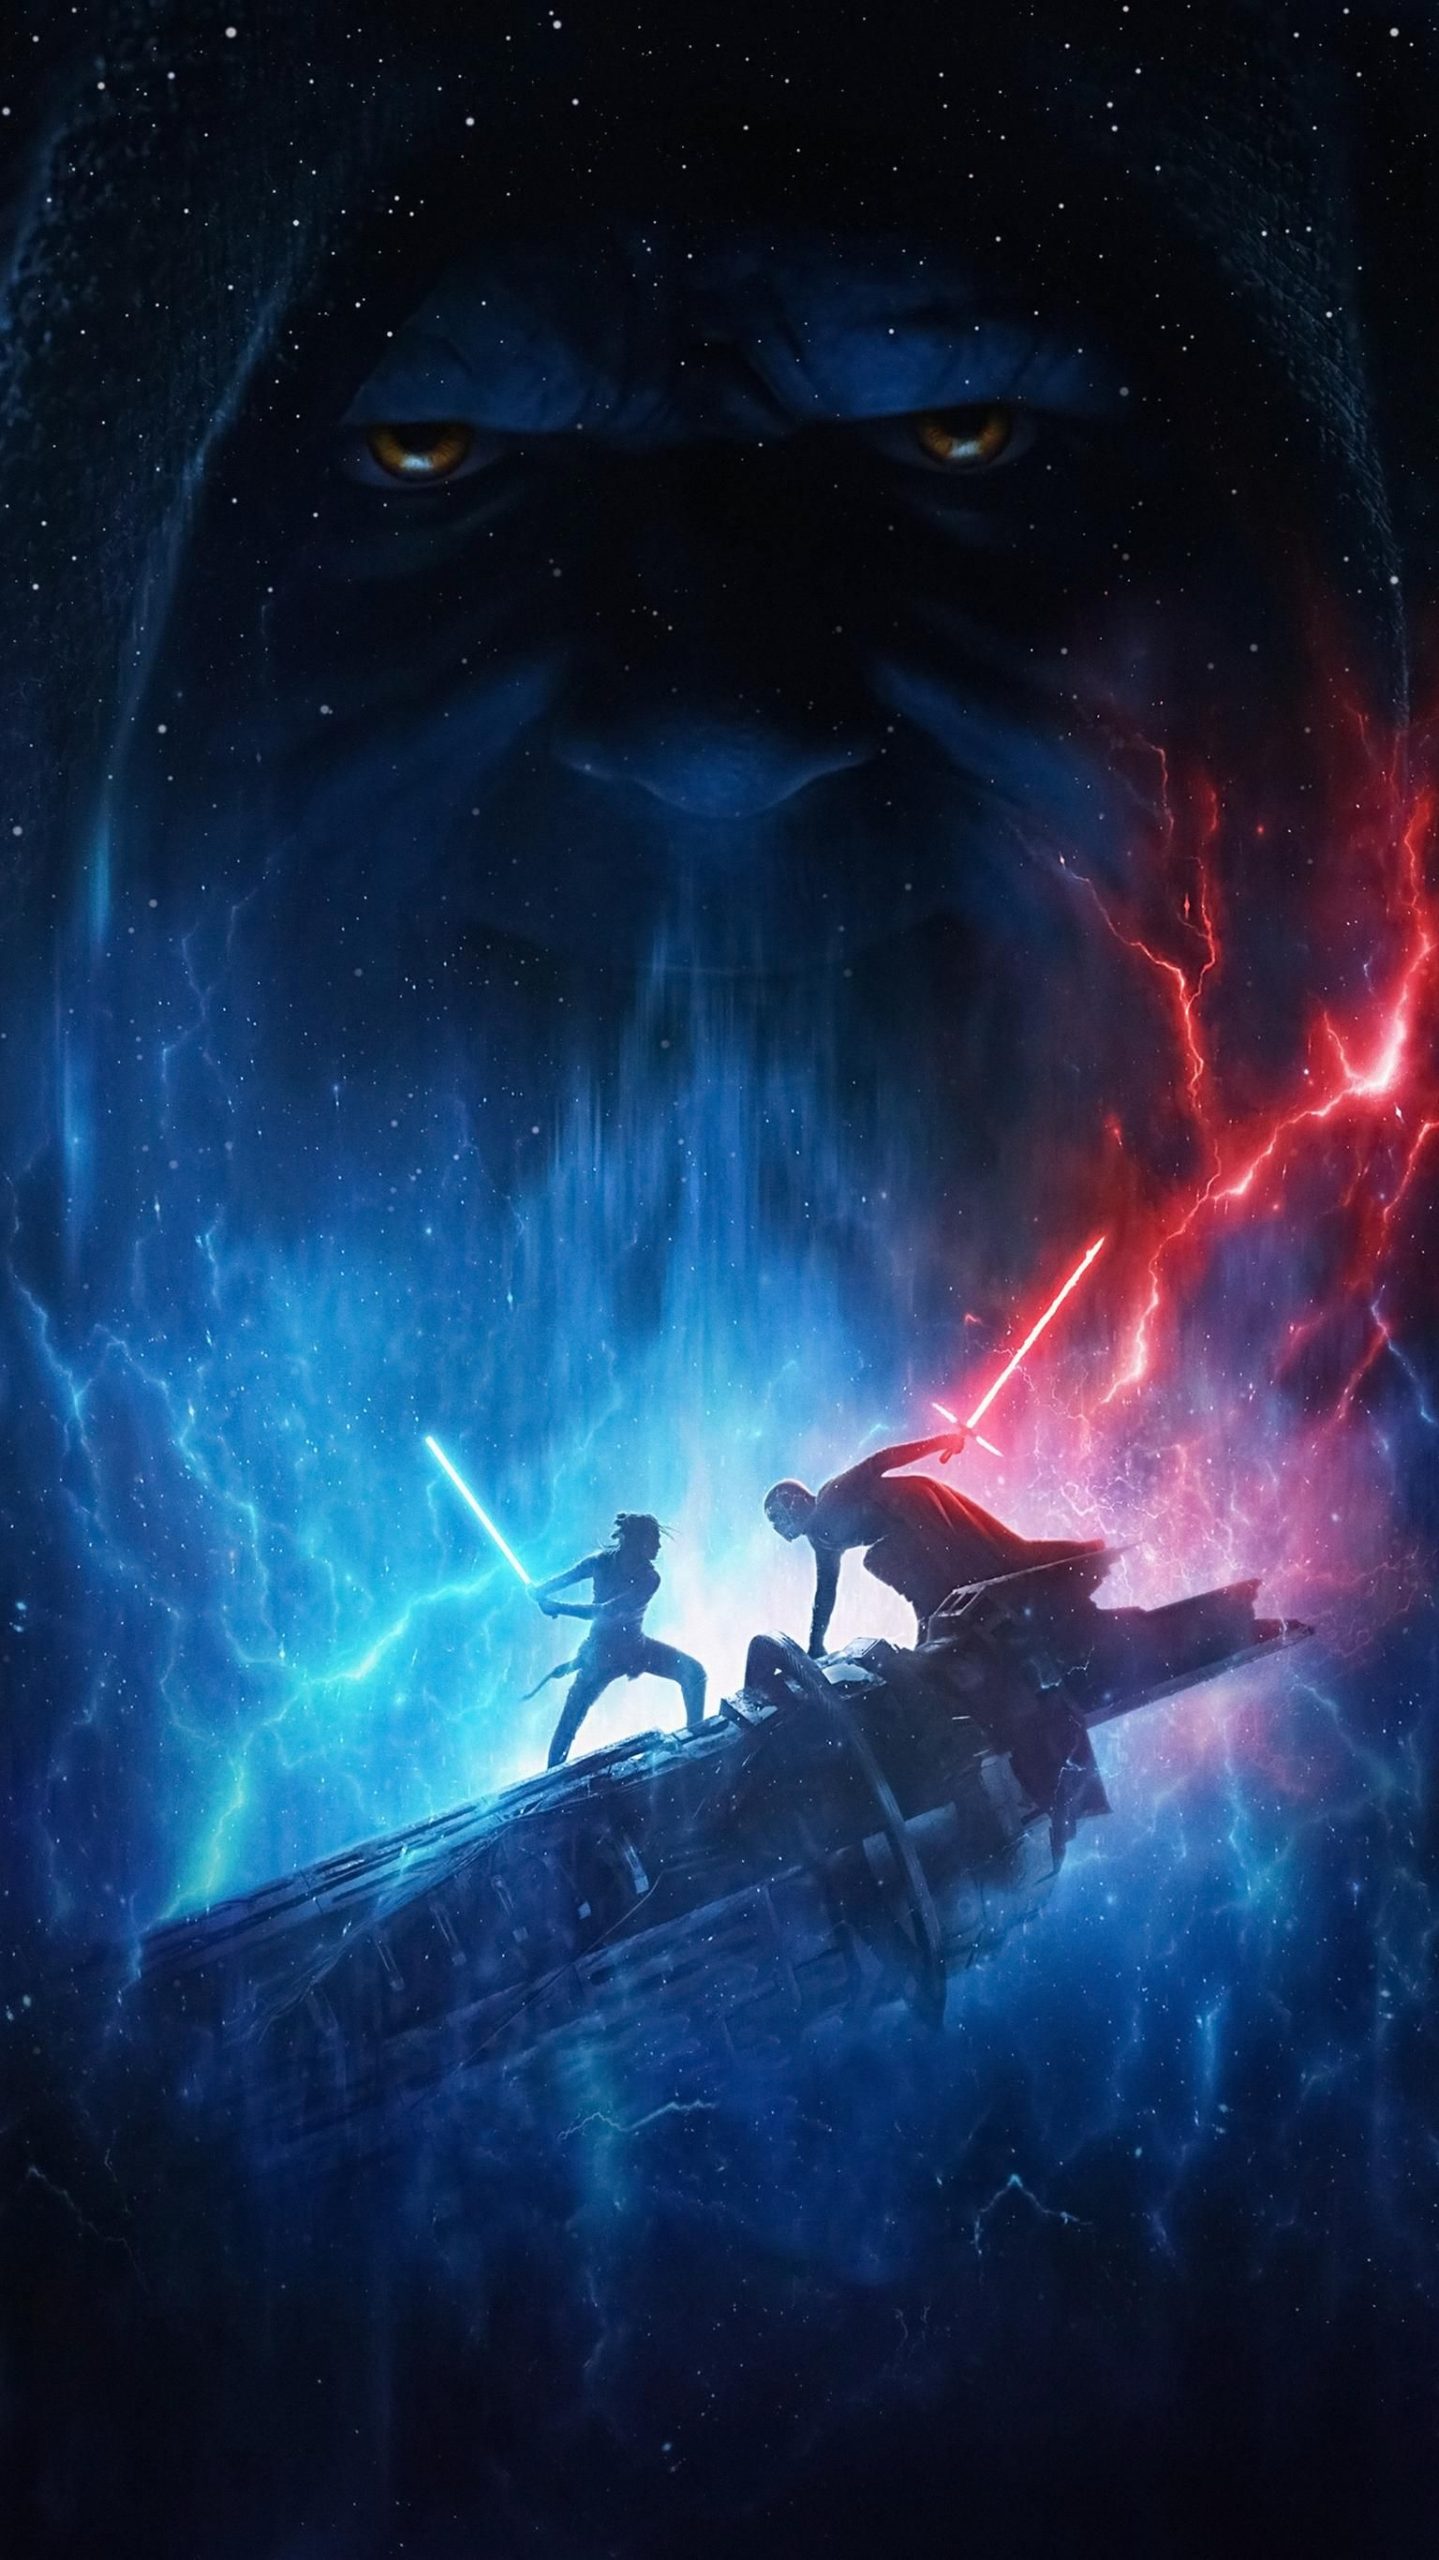 Star Wars The Rise of Skywalker 2019 4K Ultra HD Mobile Wallpaper - Star Wars